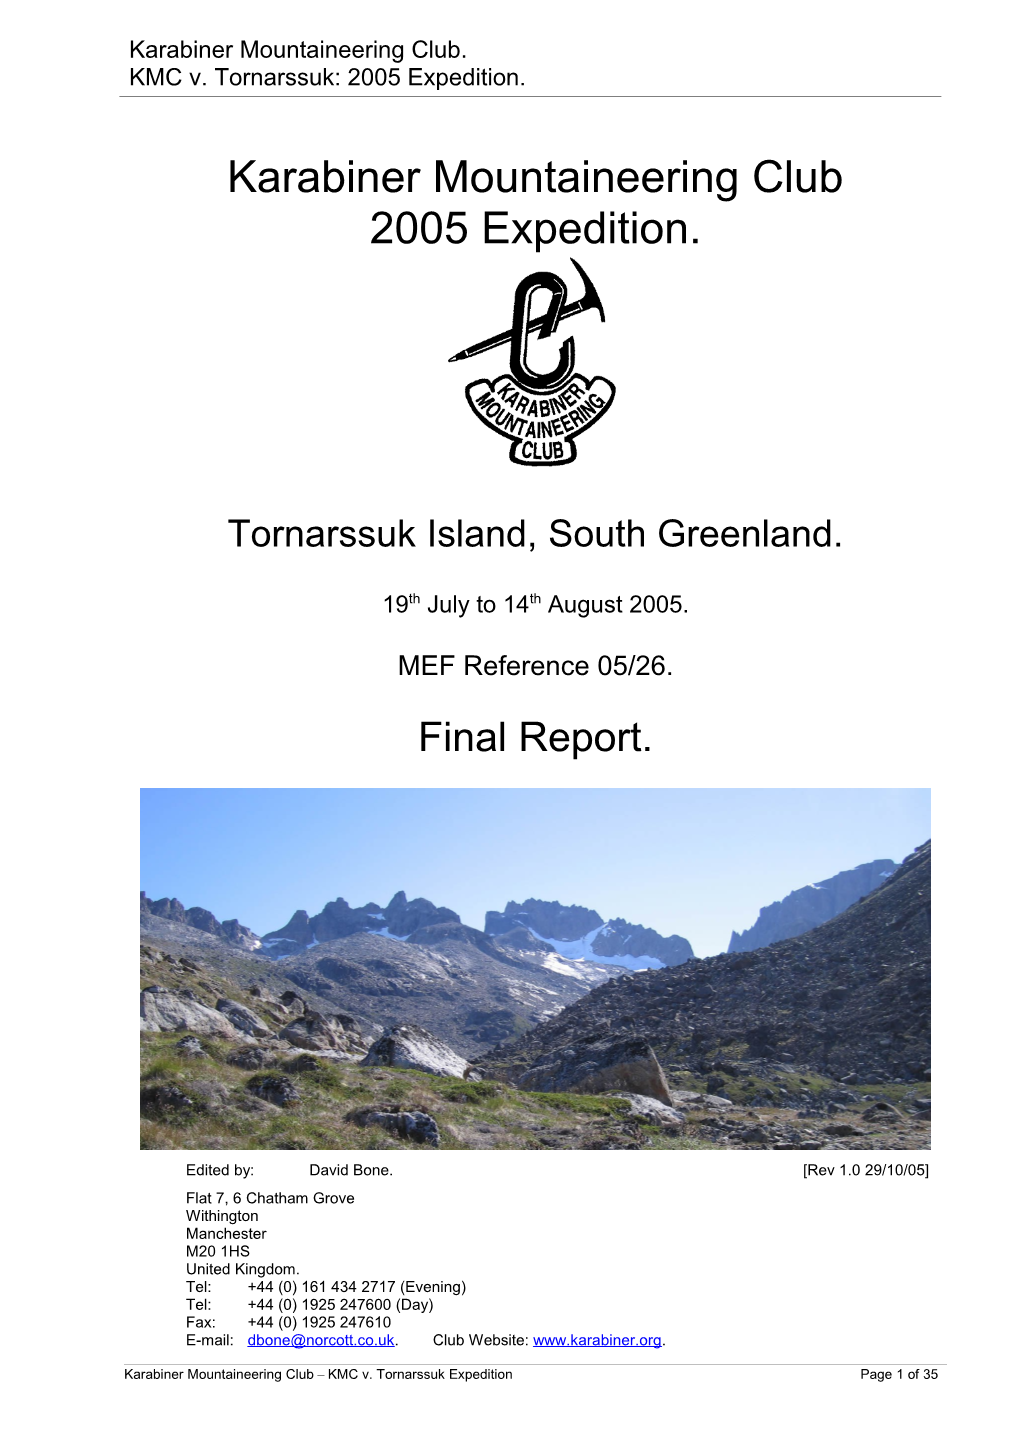 Tornarssuk Island, South Greenland